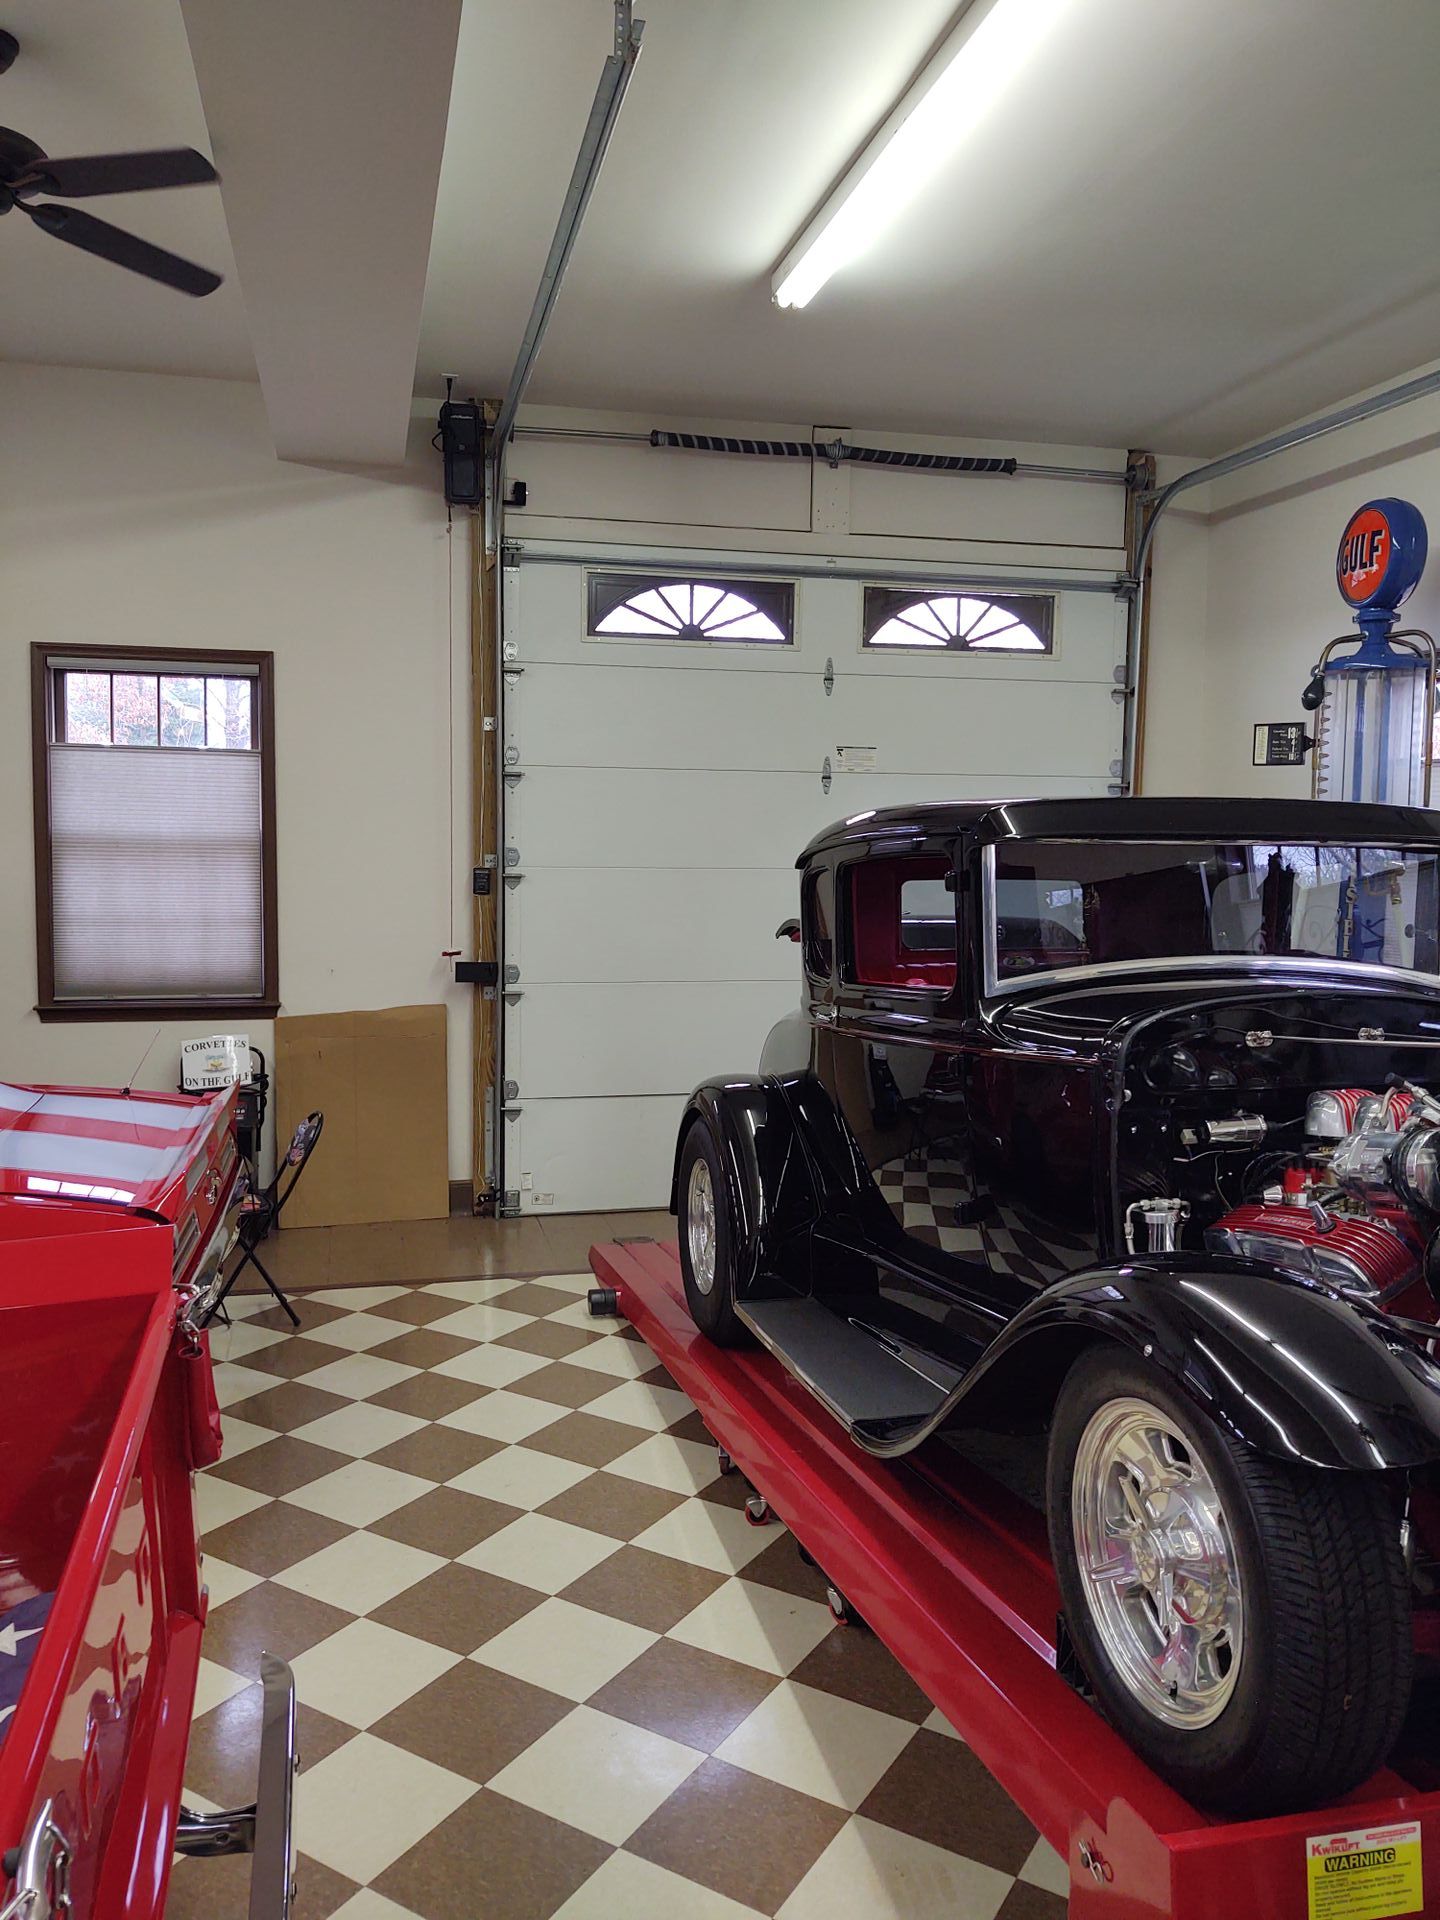 interior of garage housing old restored car